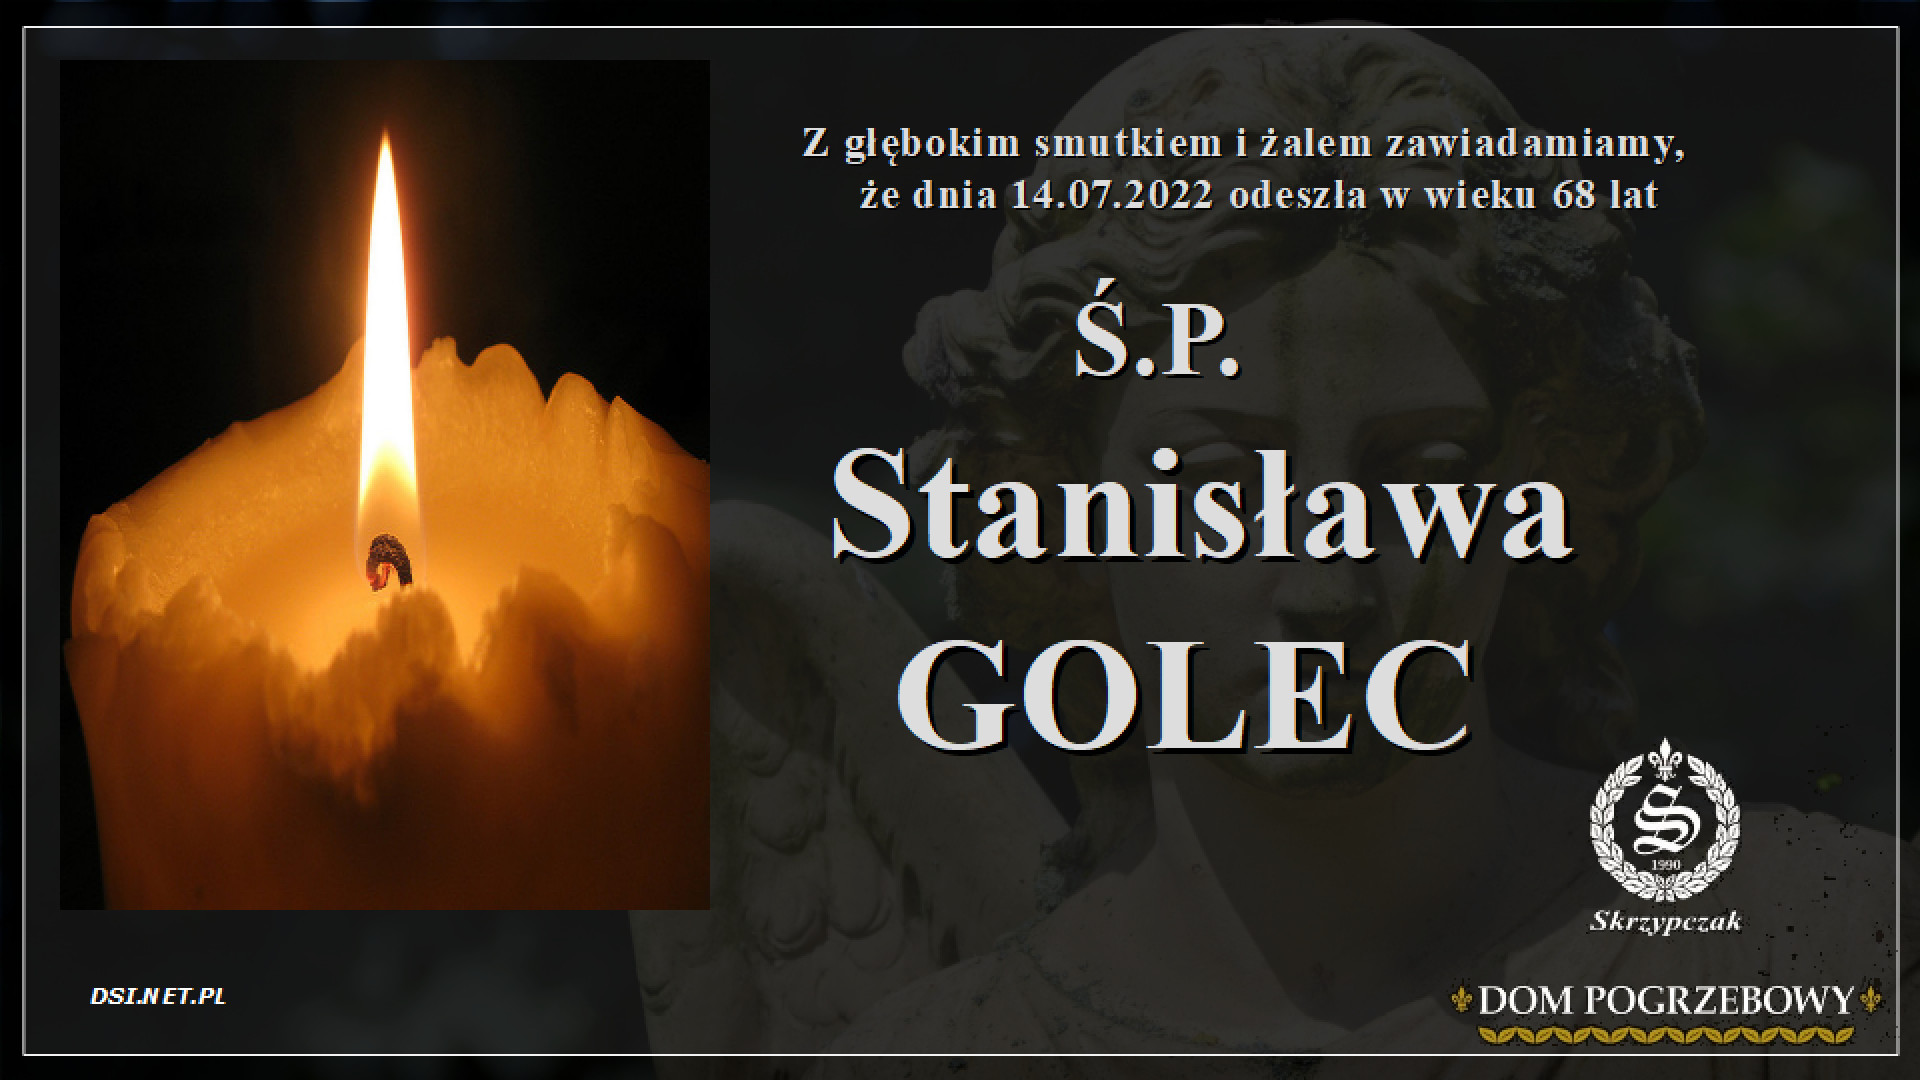 Ś.P. Stanisława Golec